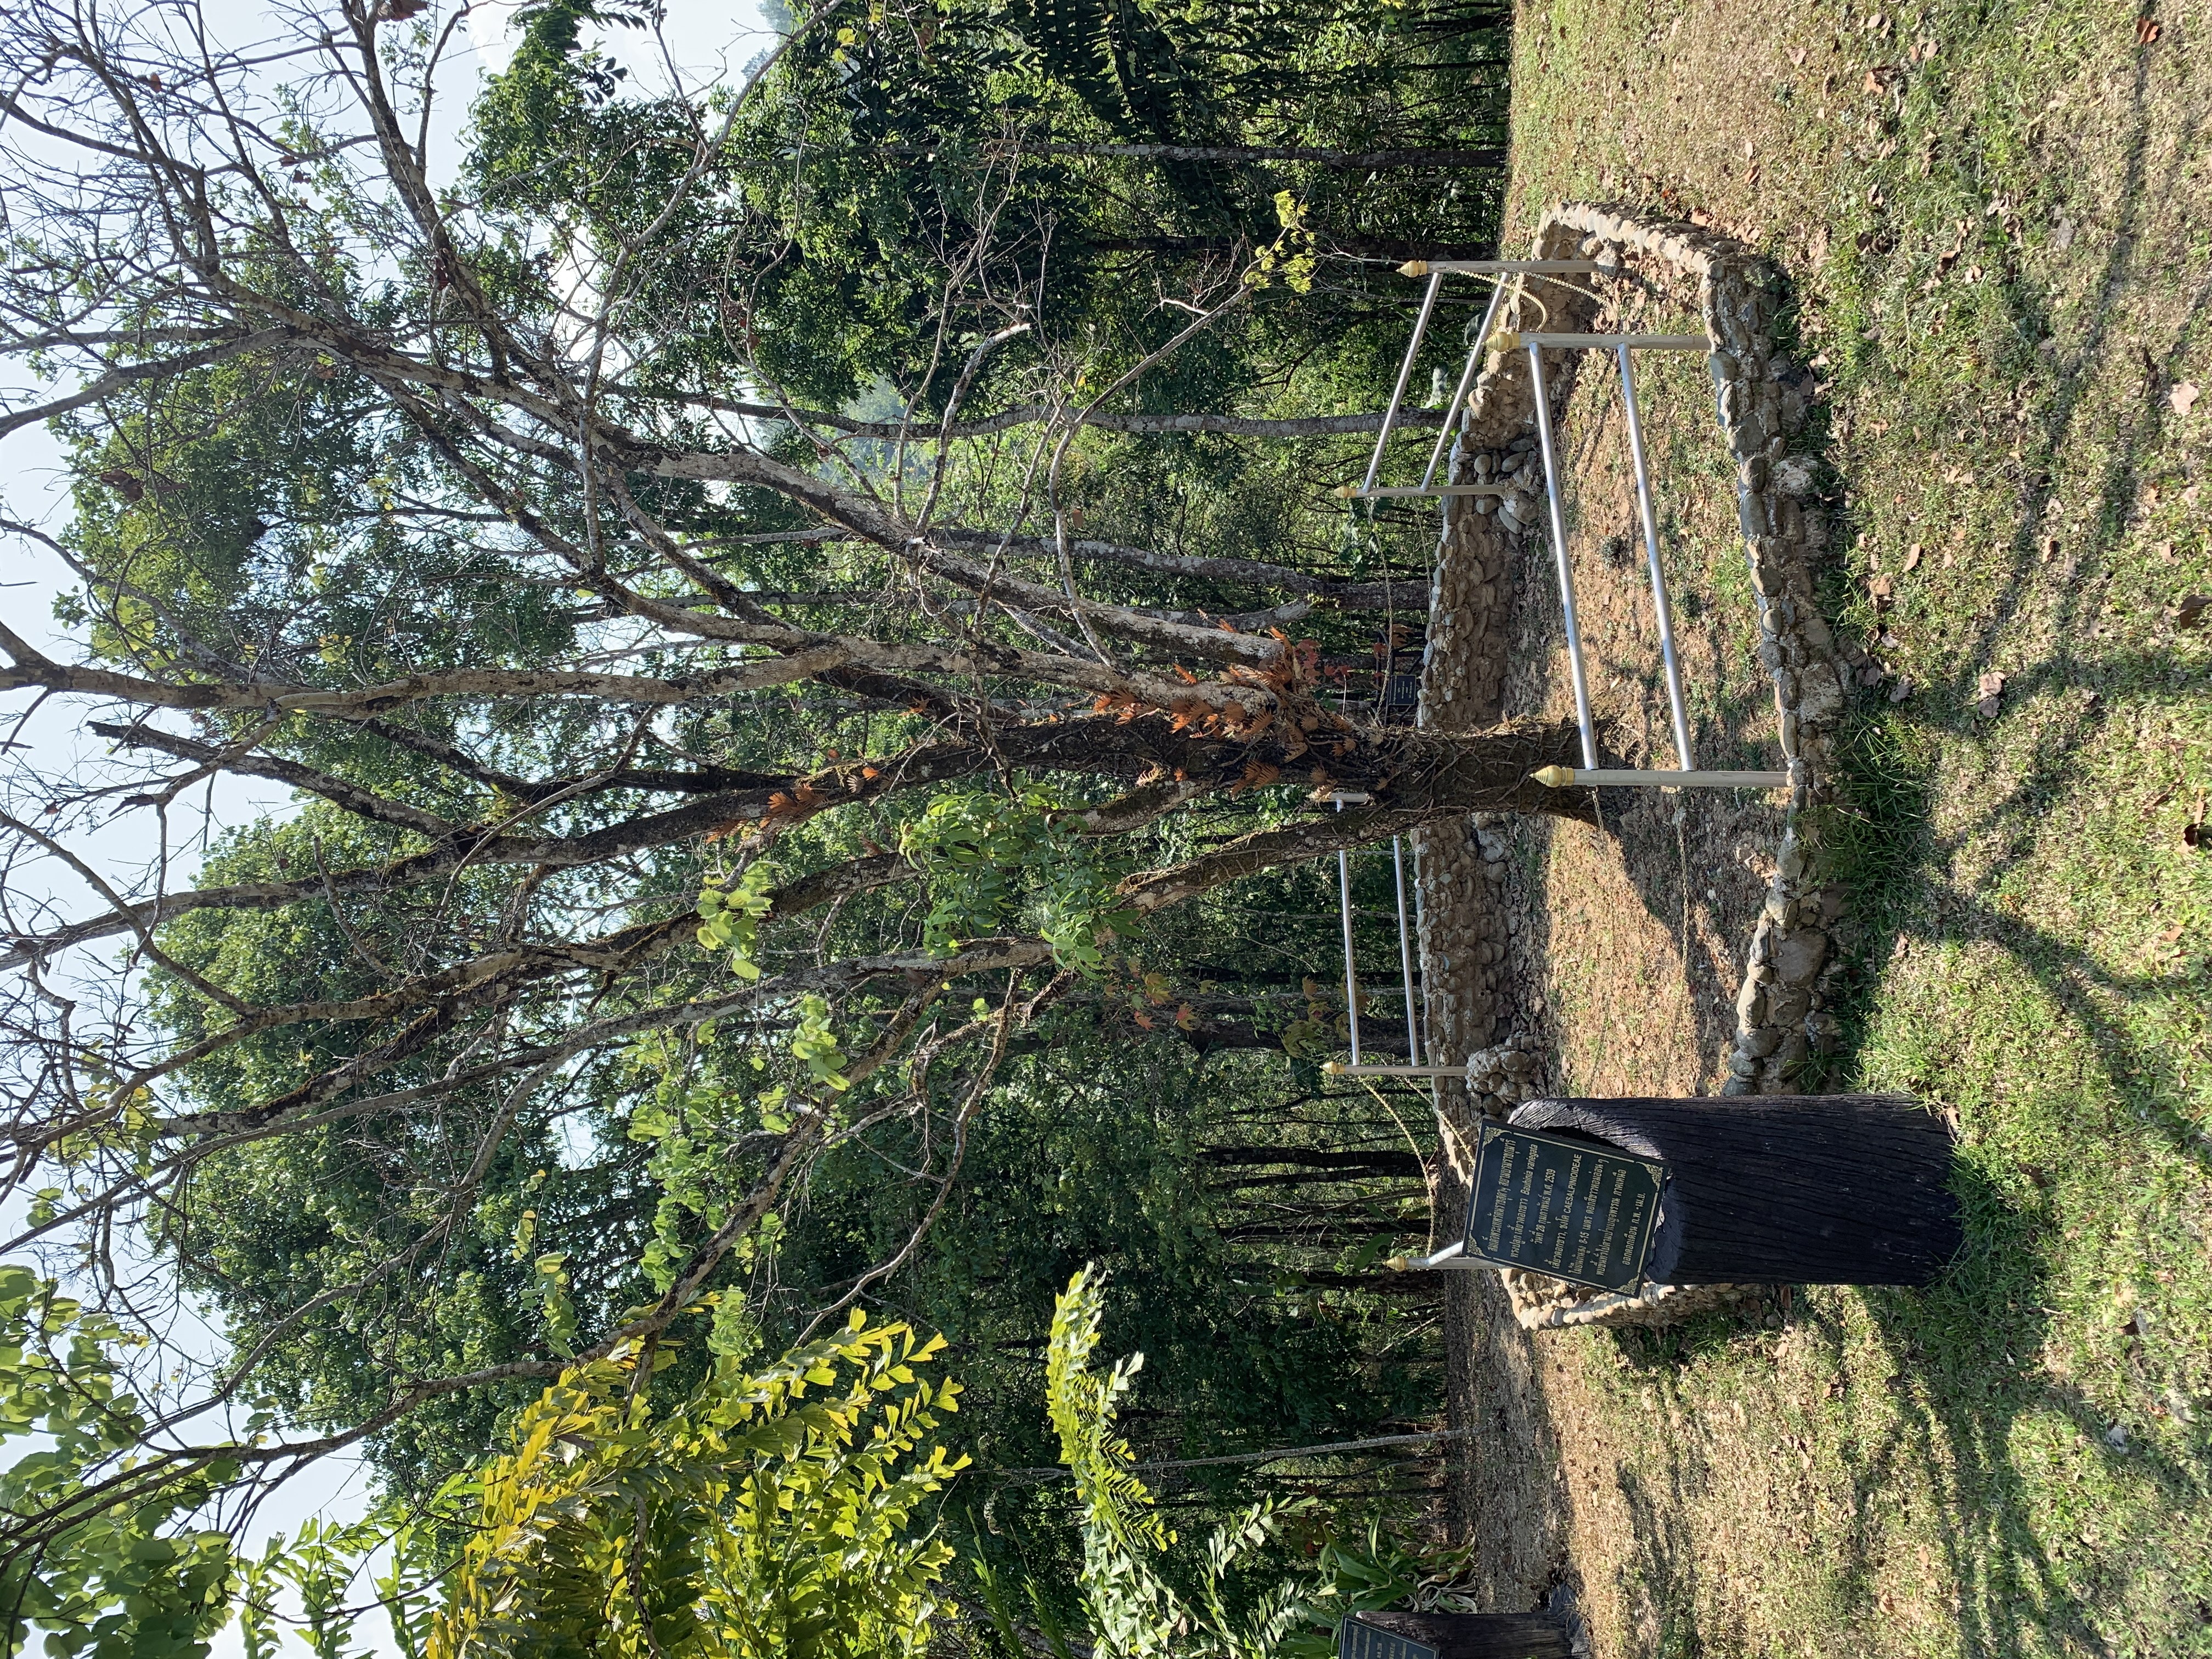 Tree planted by Her Royal Highness Princess Maha Chakri Sirindhorn 28 Feb 1996